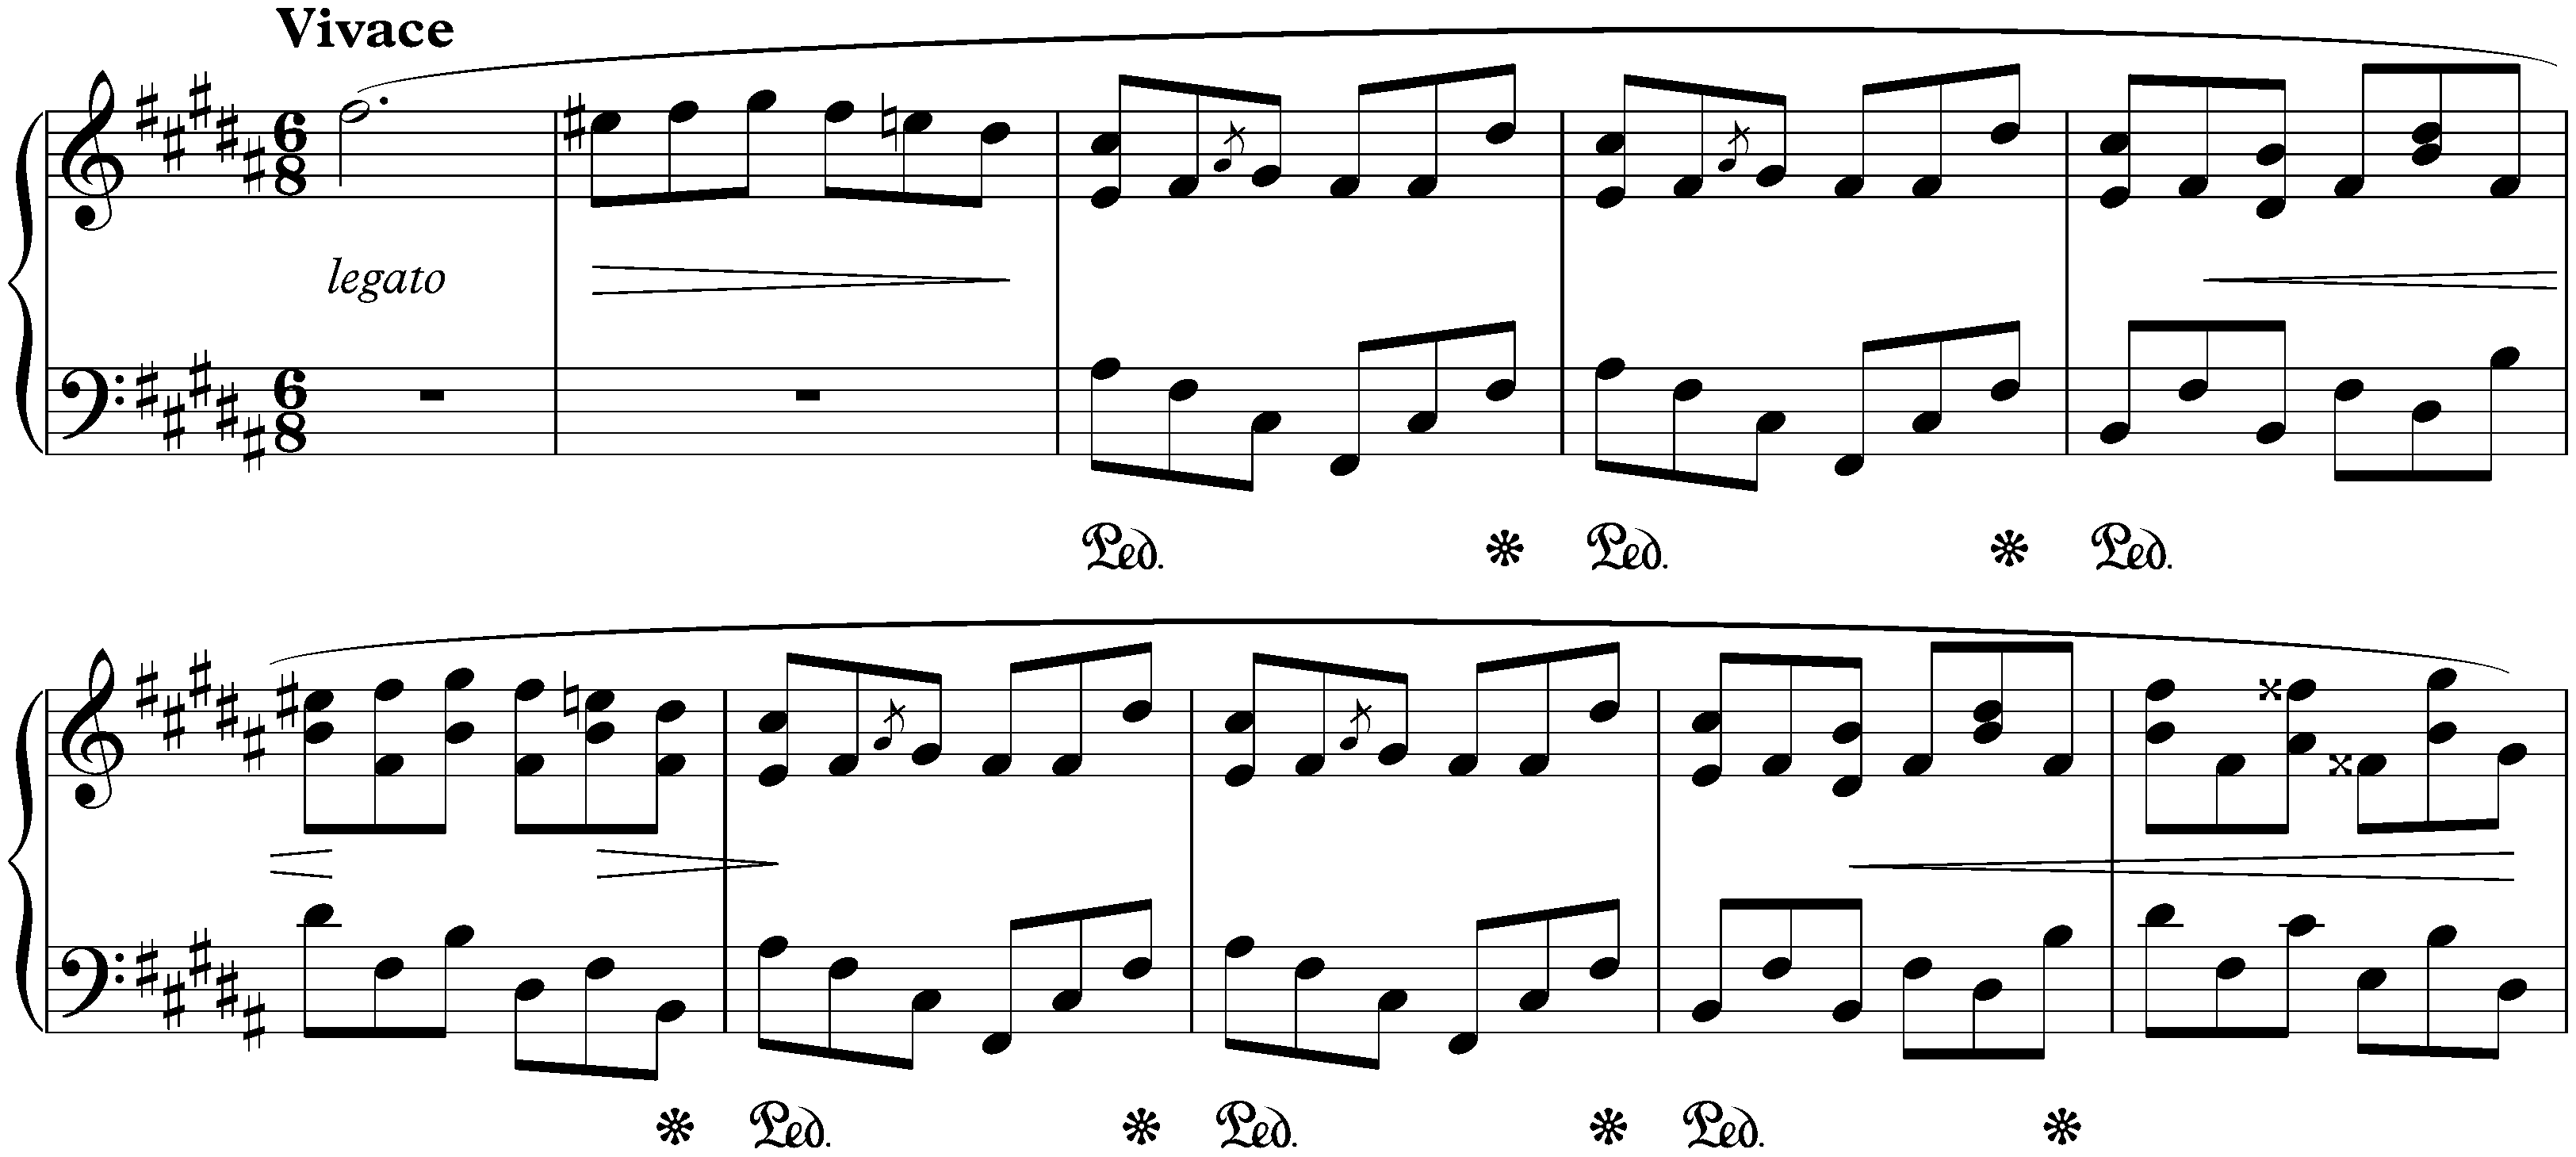 Twenty-four Préludes, op. 28; 11. B major